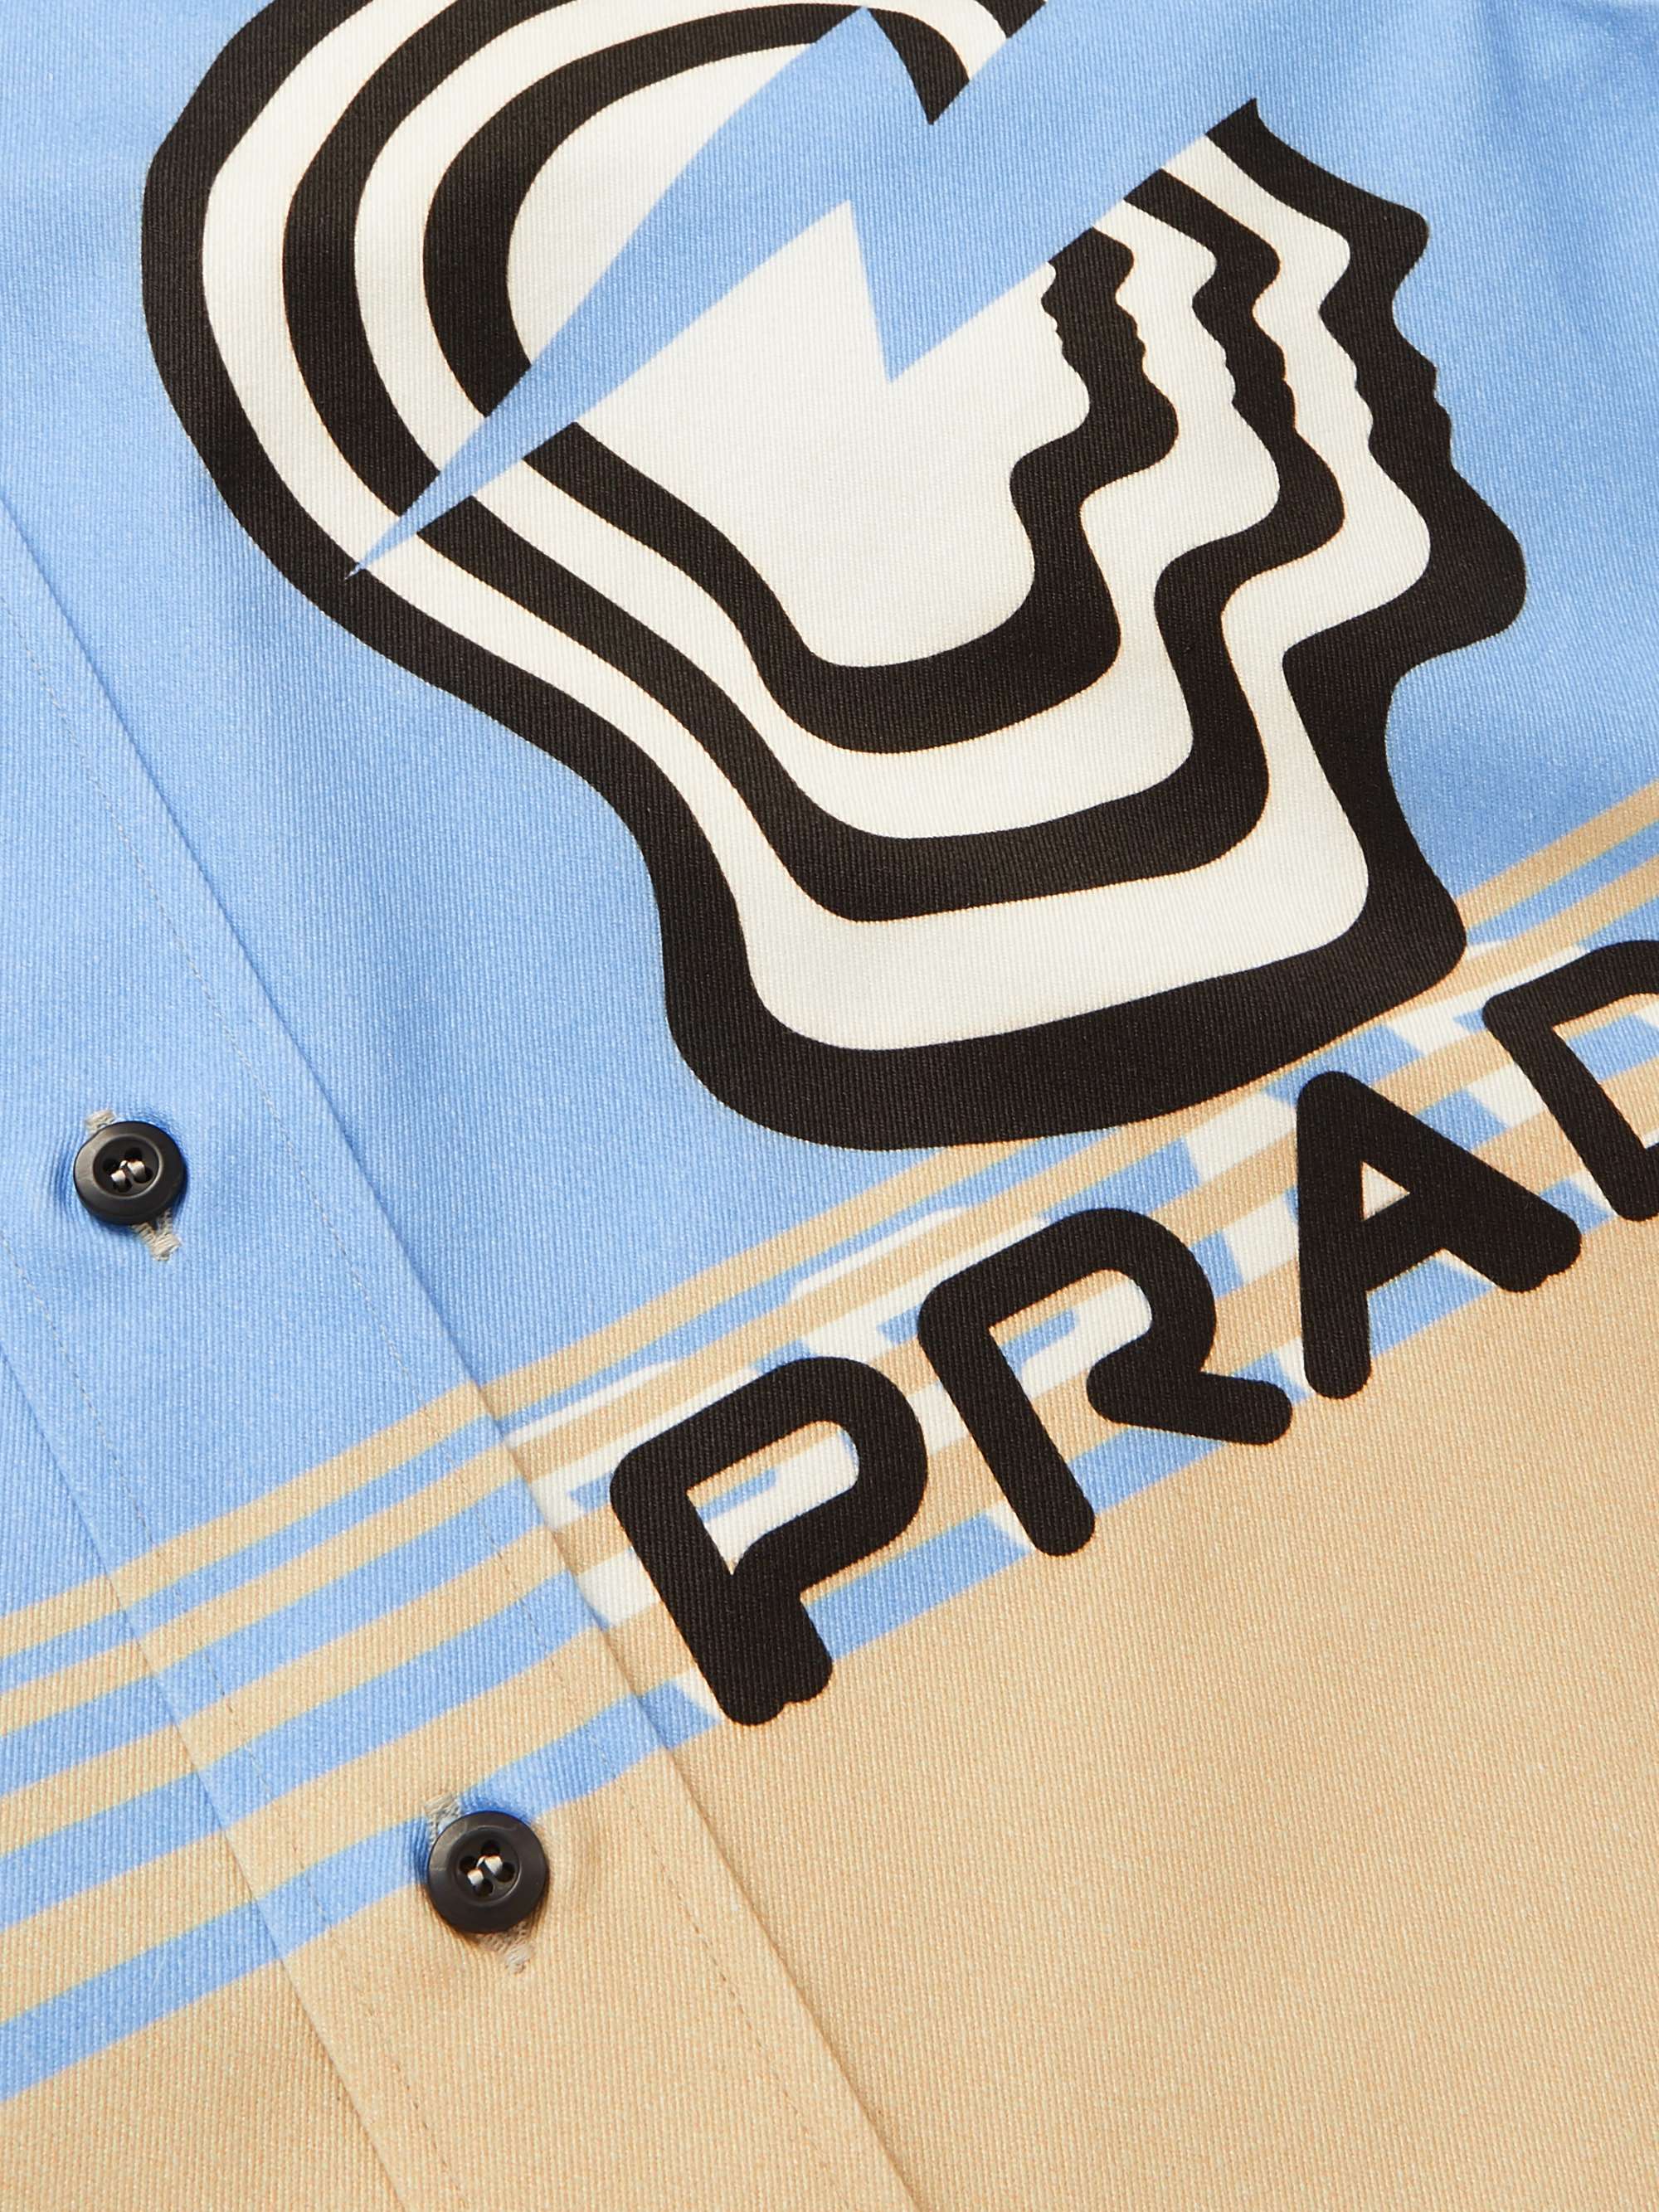 PRADA Button-Down Collar Printed Cotton-Twill Shirt